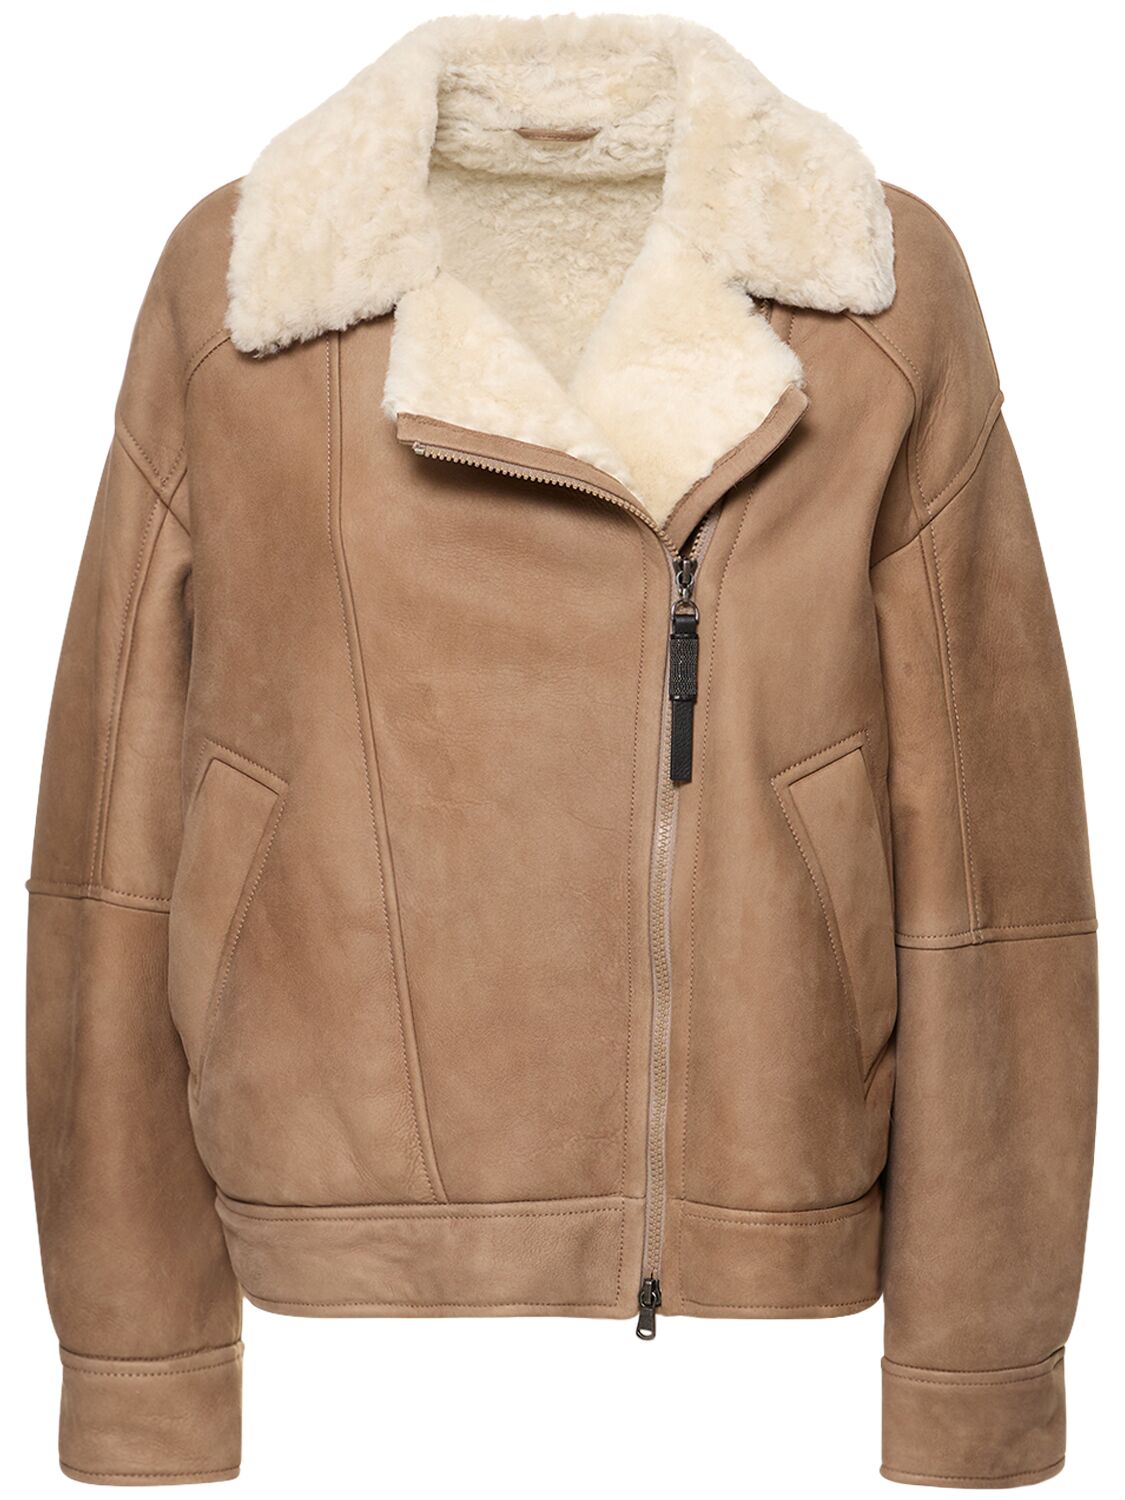 Shearling Leather Jacket W/ Zip – WOMEN > CLOTHING > JACKETS